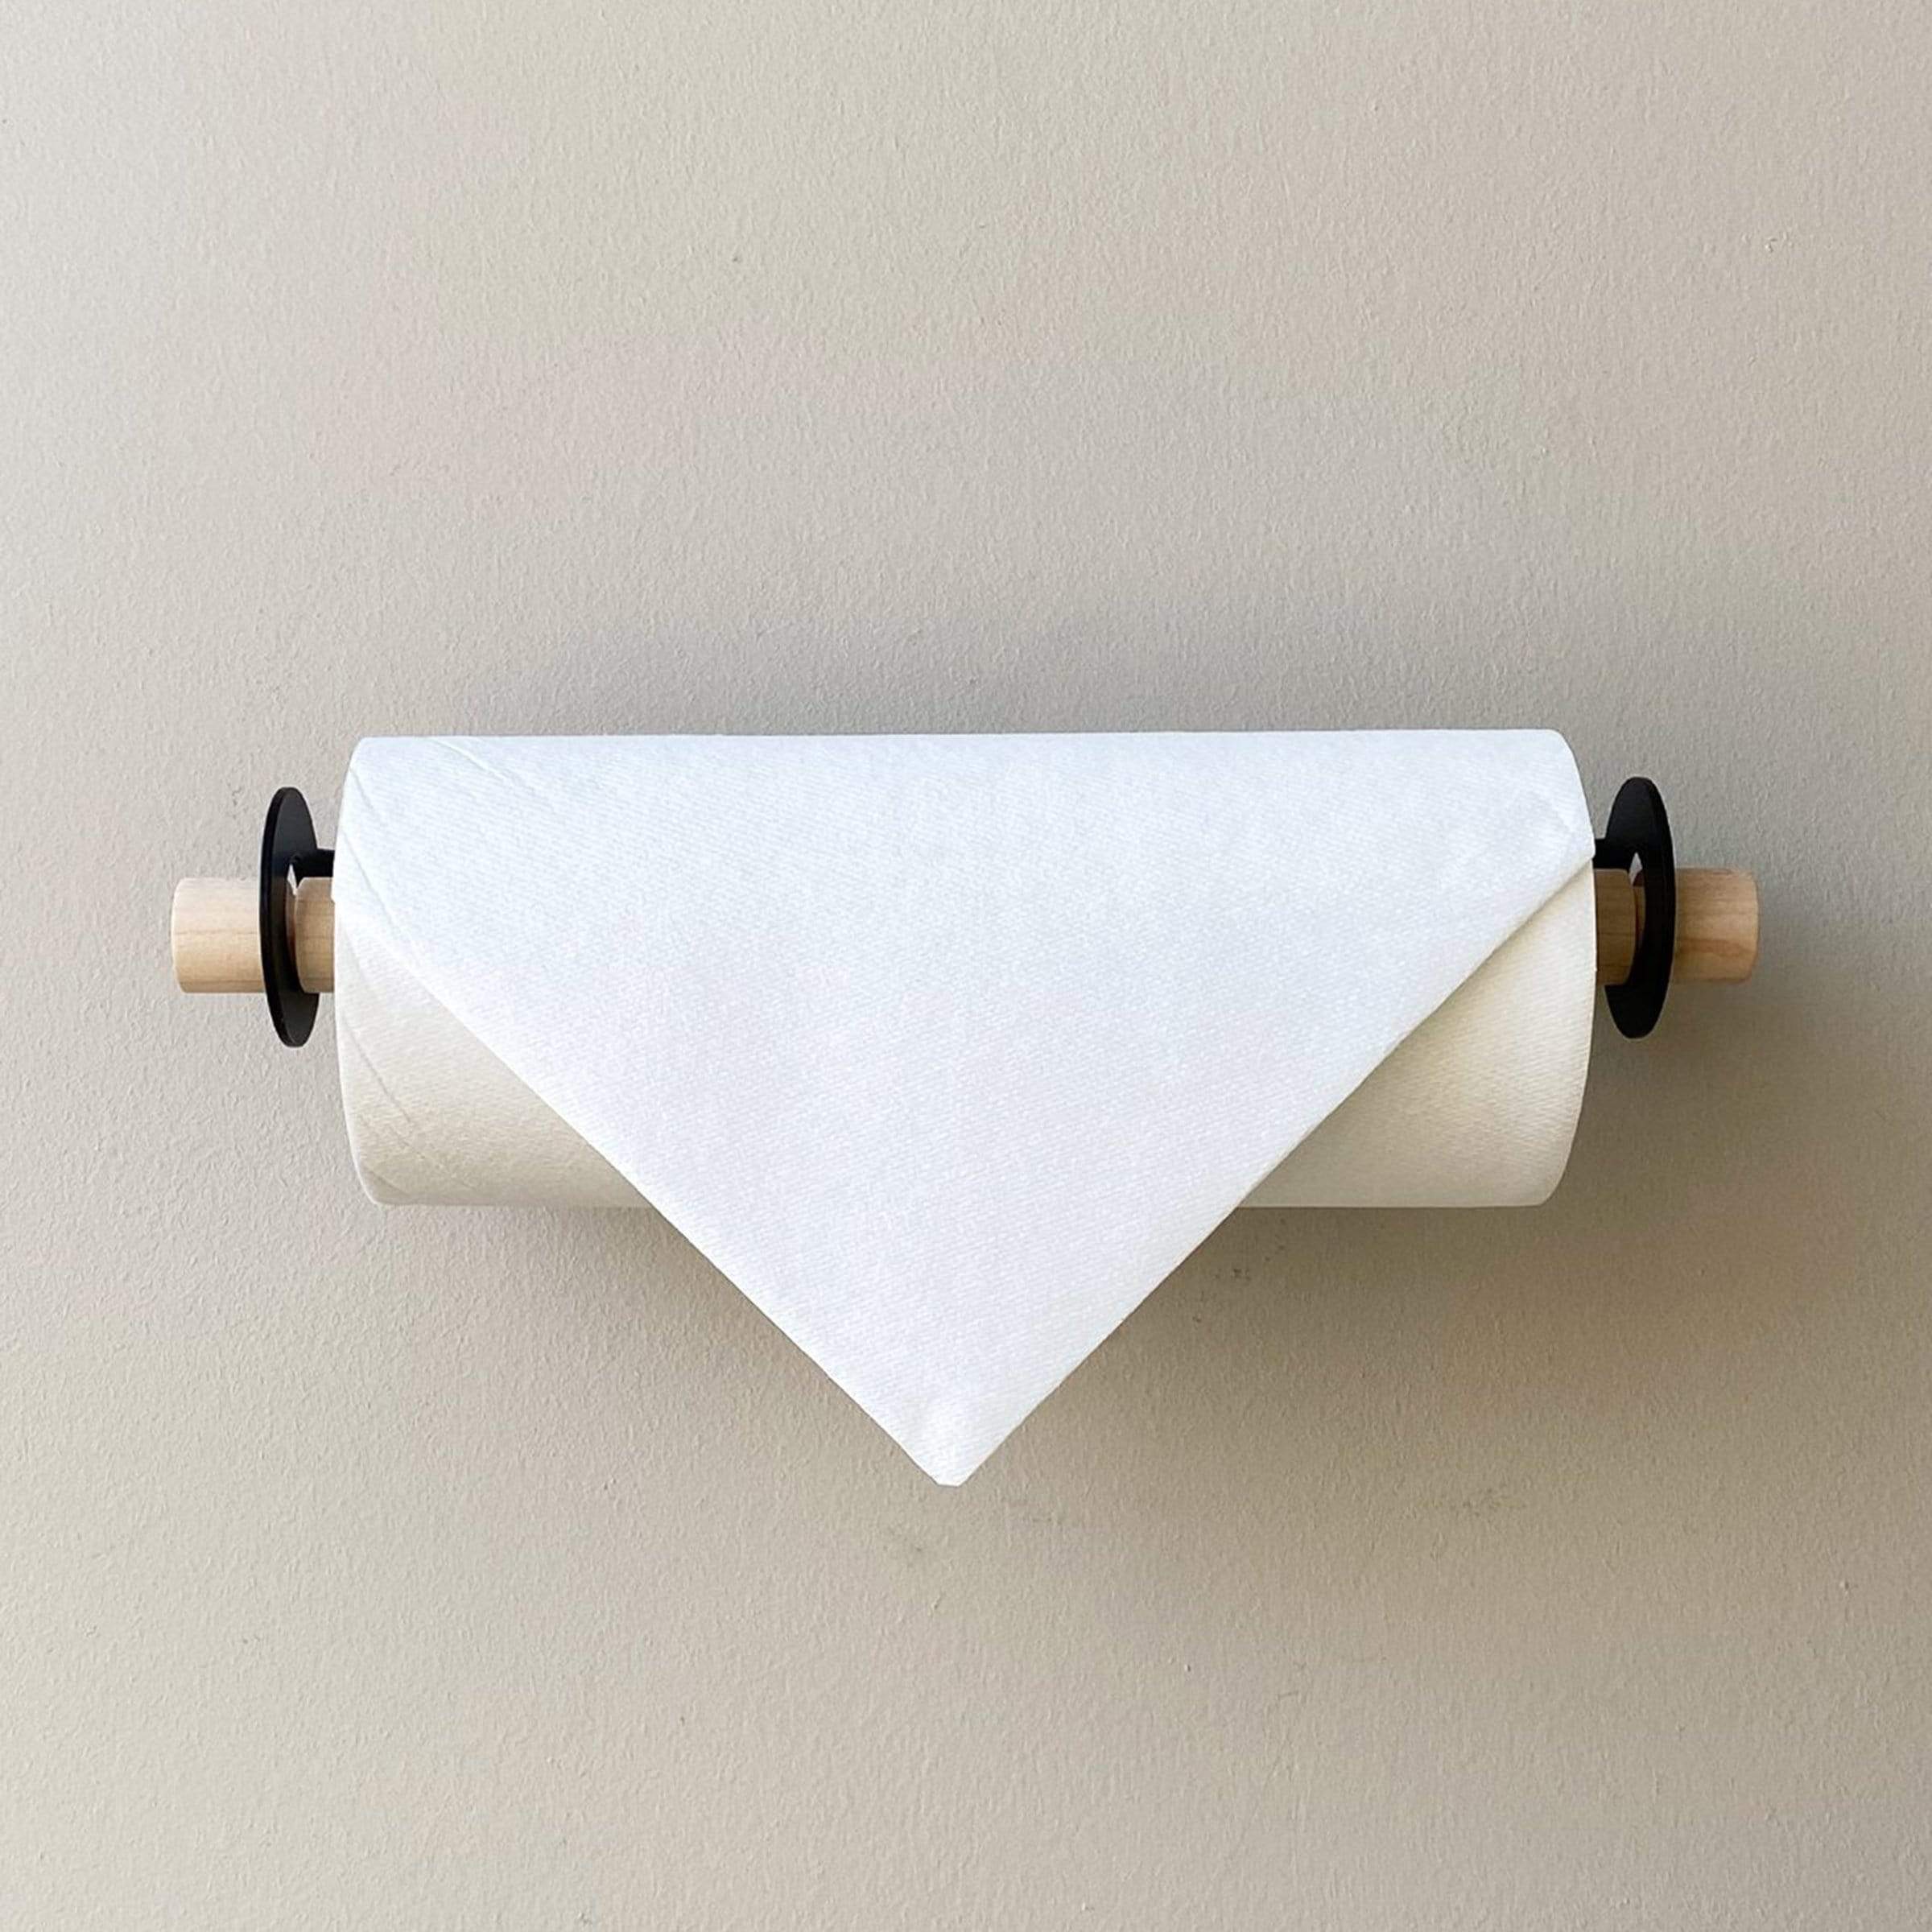 Danish Paper Towel Holder by Schoolhouse